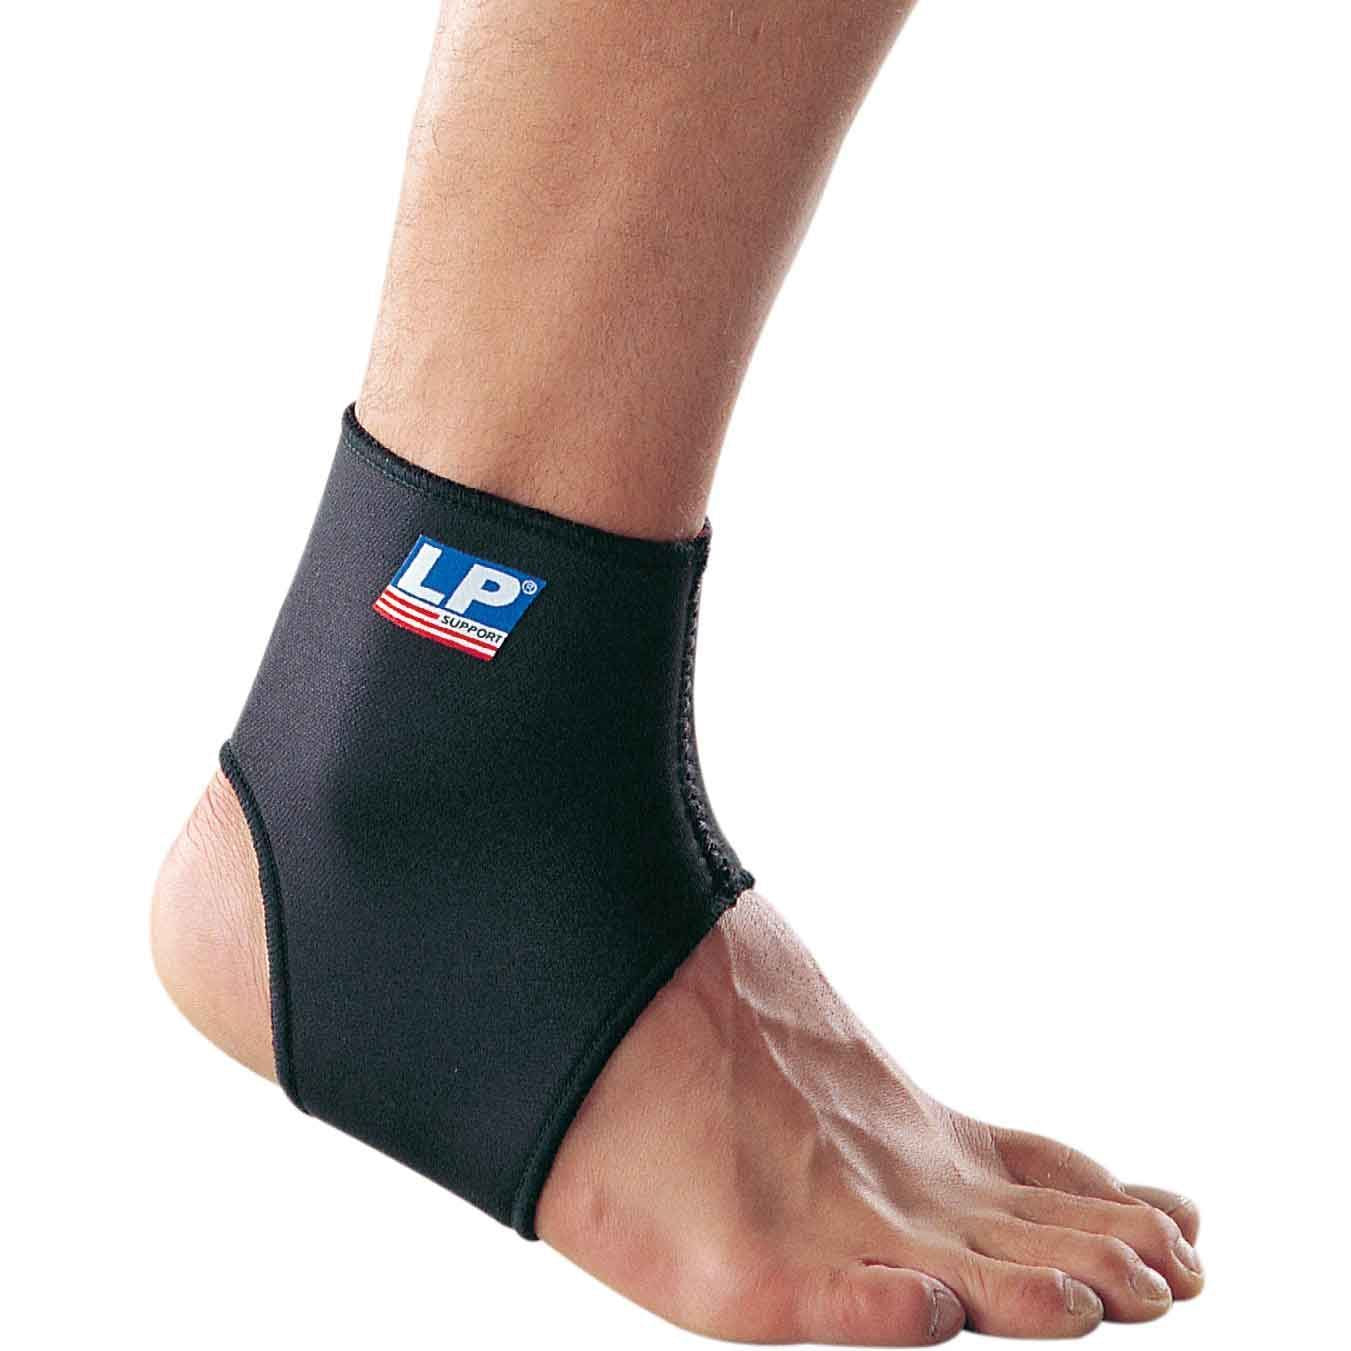 LP 704-BK Ankle Support